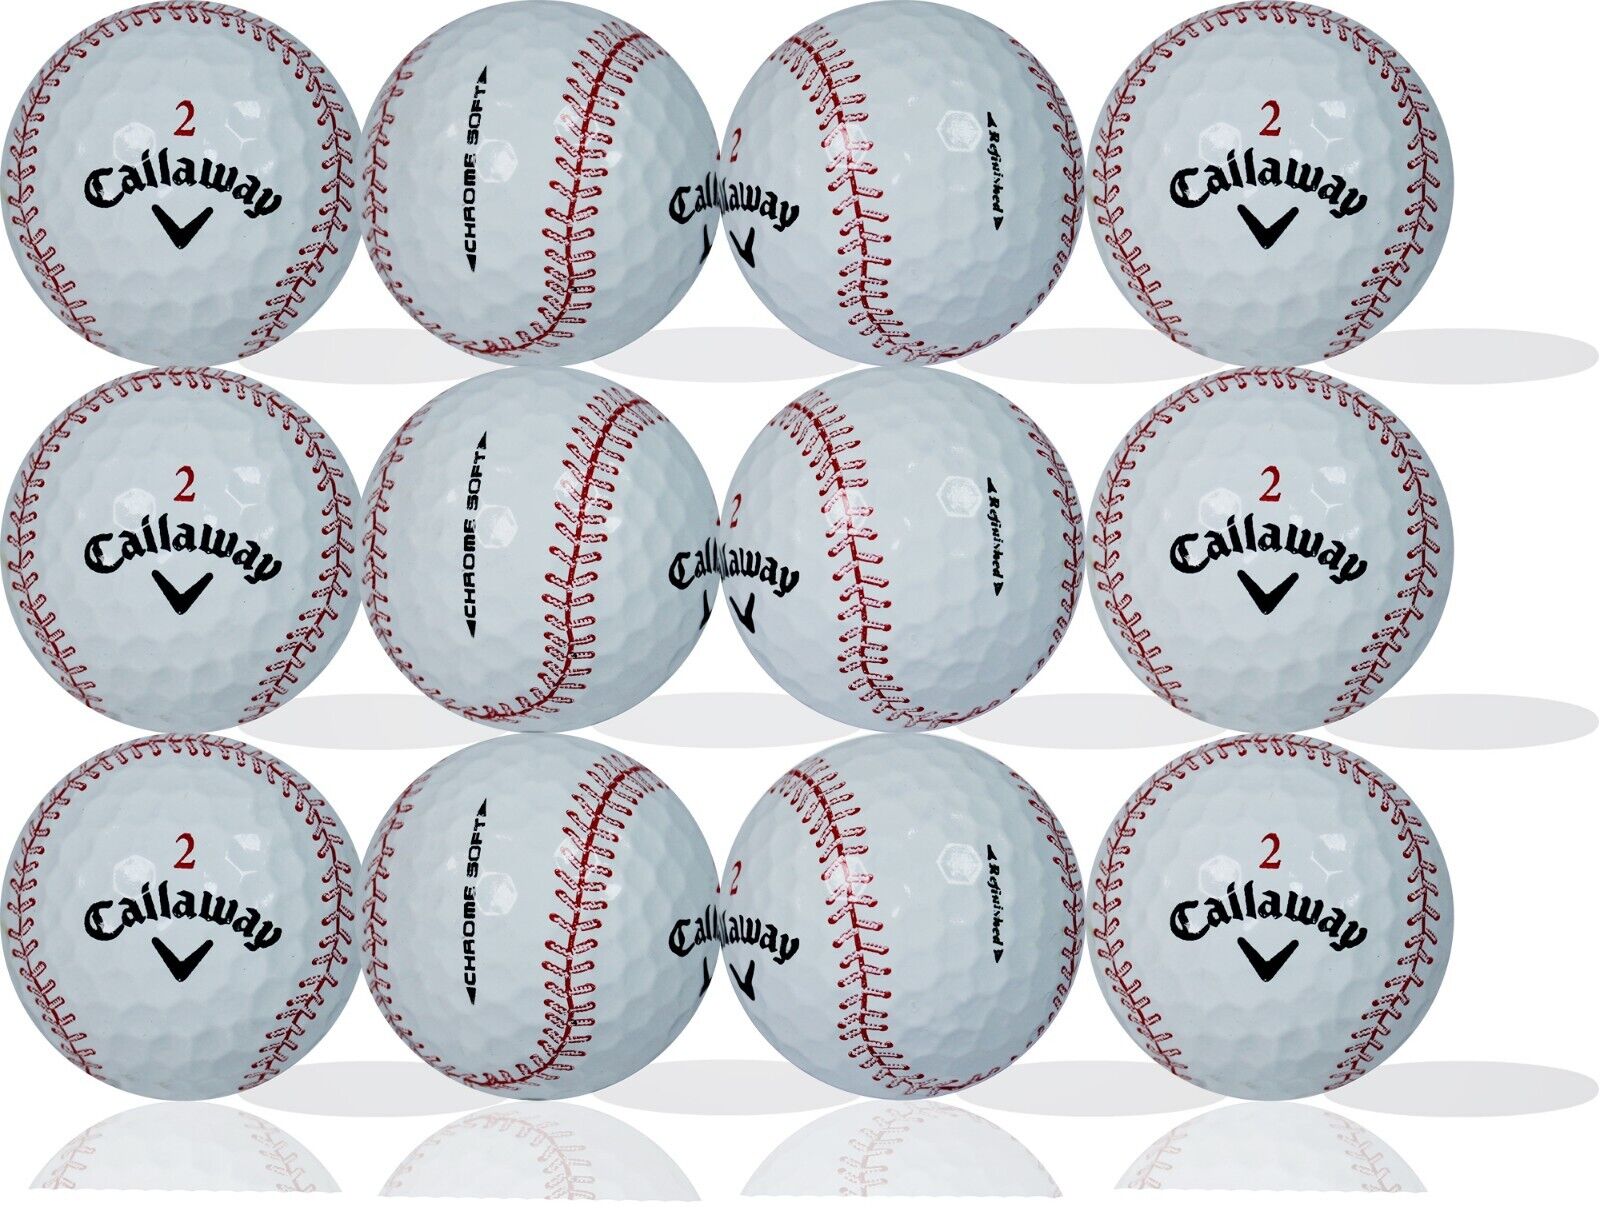 Baseball Callaway Chrome soft Golf Balls Refinished 12 Pack -Christmas Packaging